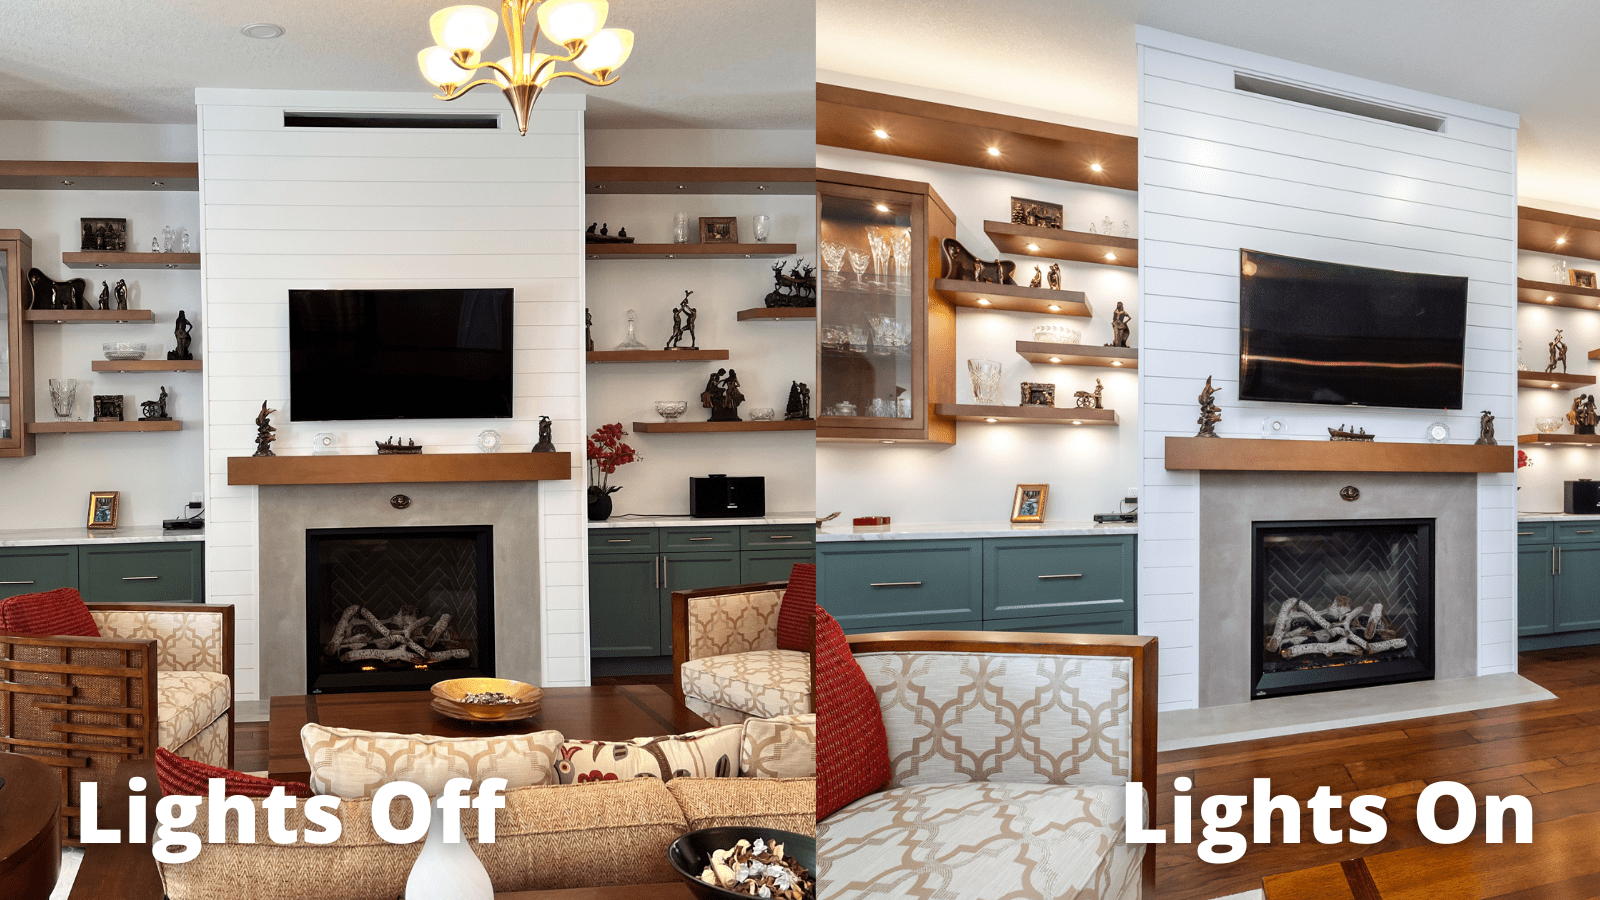 Fireplace Lights Off/FIreplace Lights On, Contact Renovations blog